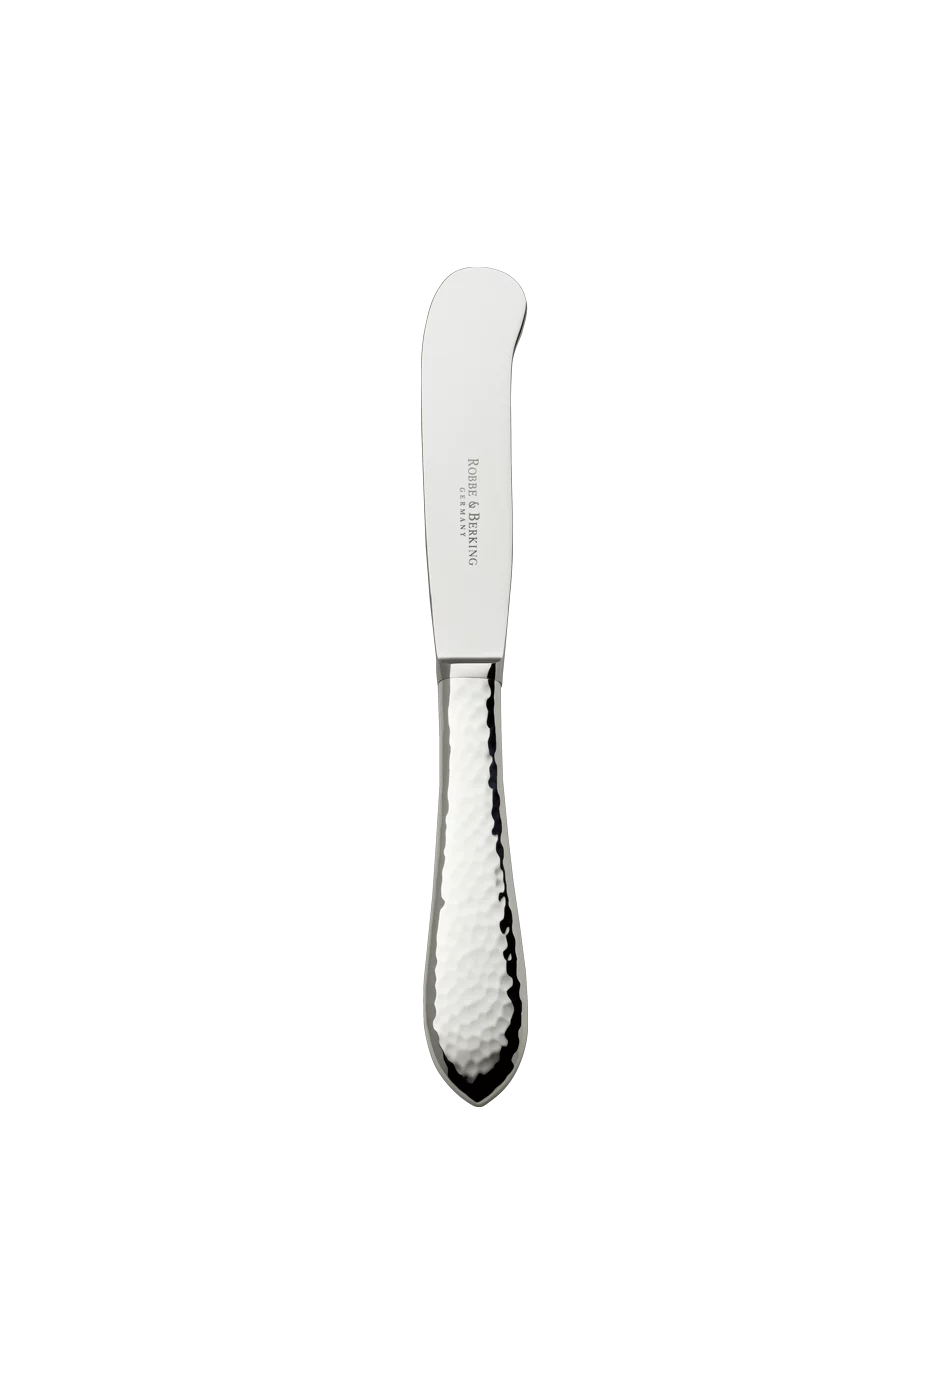 Martelé Butter Knife (150g massive silverplated)